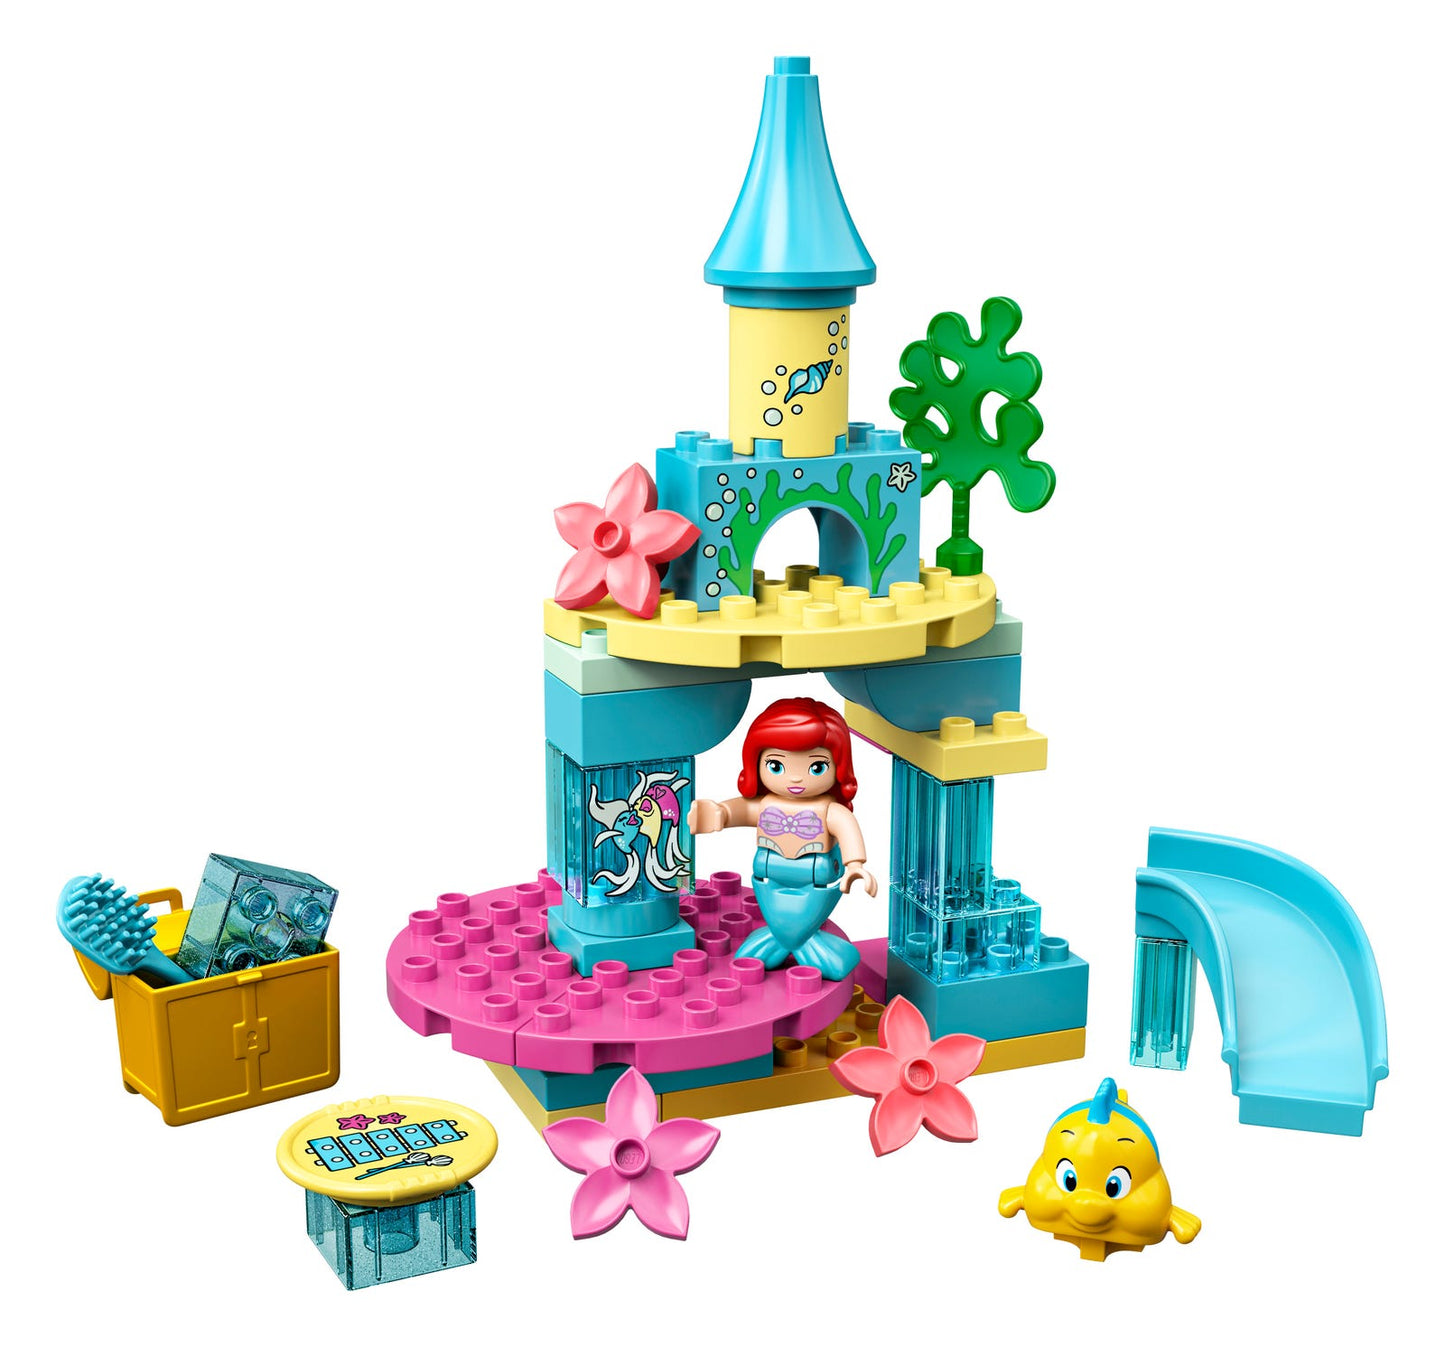 Lego Duplo Ariel's Undersea Castle 10922